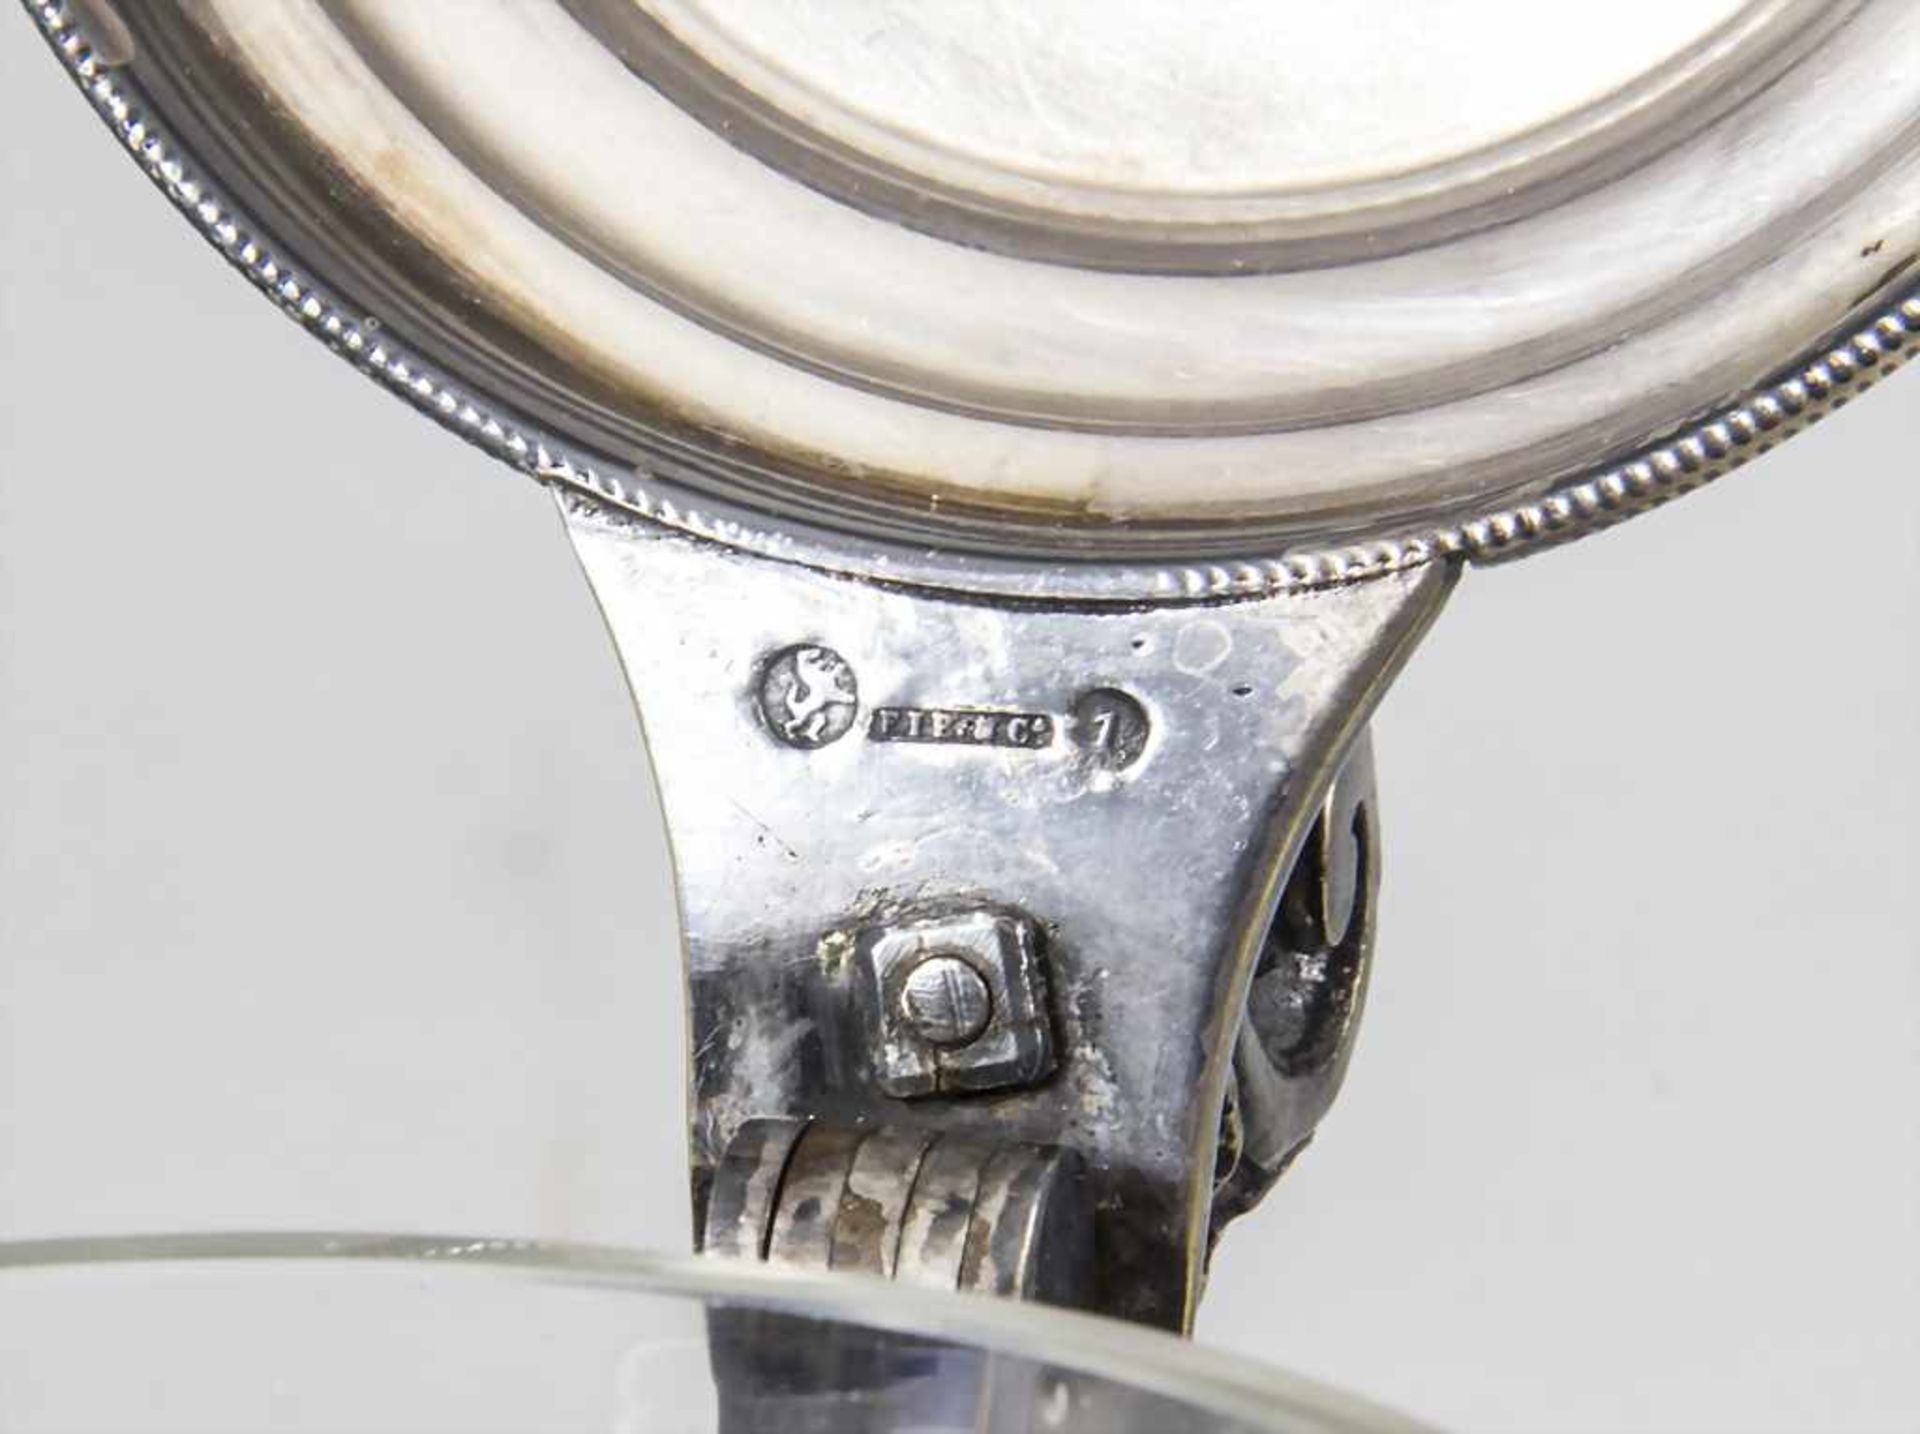 Bierkrug / A glass beer mug with plated lid - Image 5 of 5